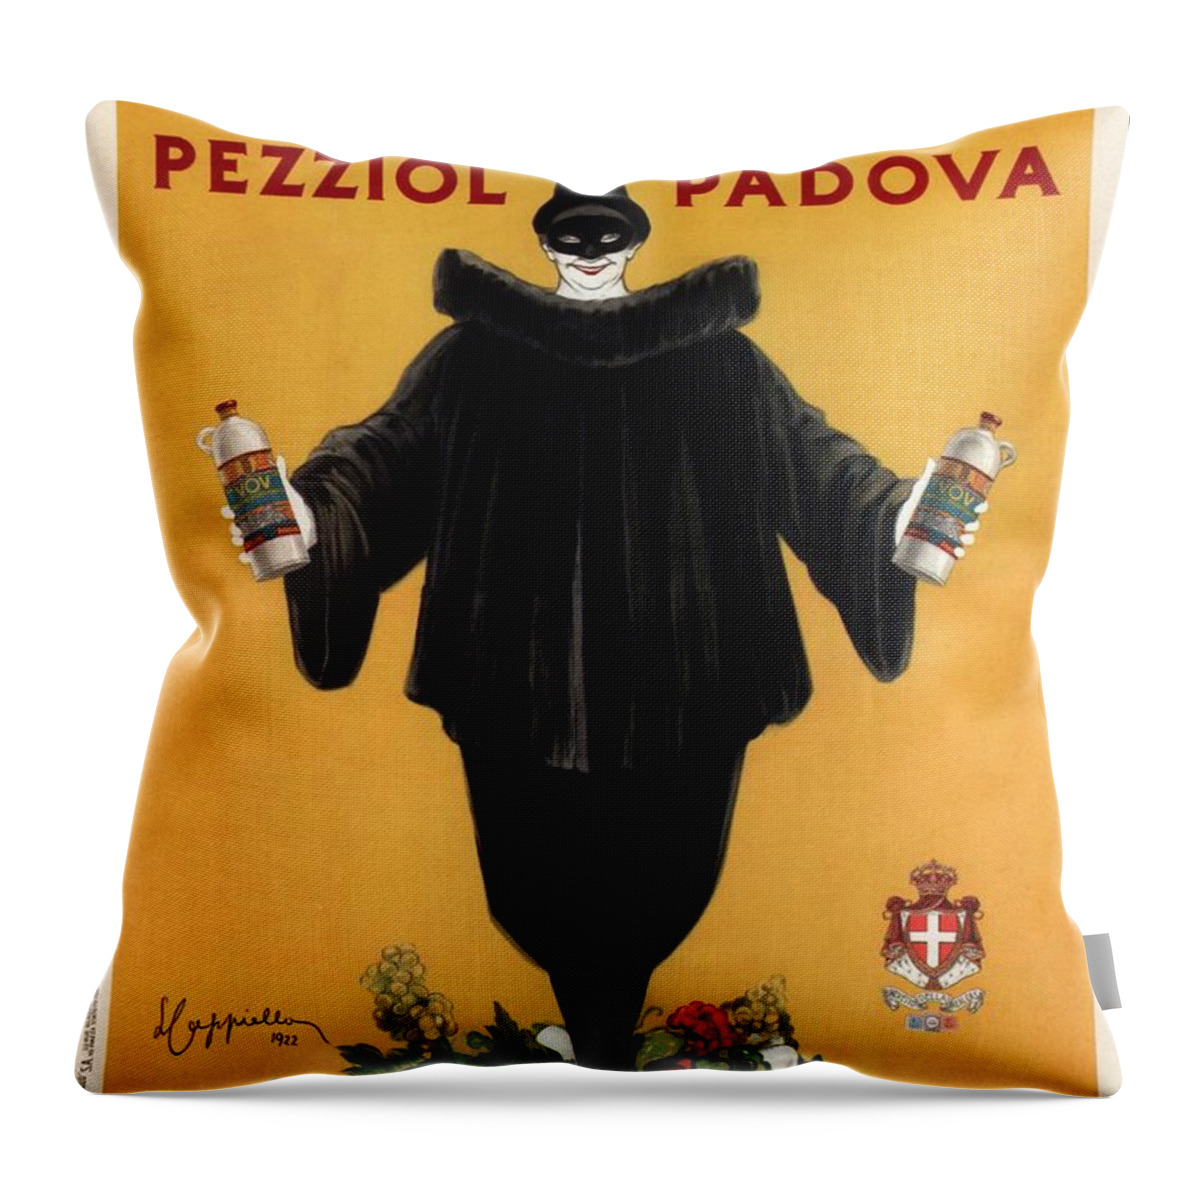 Vintage Throw Pillow featuring the mixed media Vov Pezziol - Italian Liquer - Padova, Italy - Vintage Advertising Poster by Studio Grafiikka